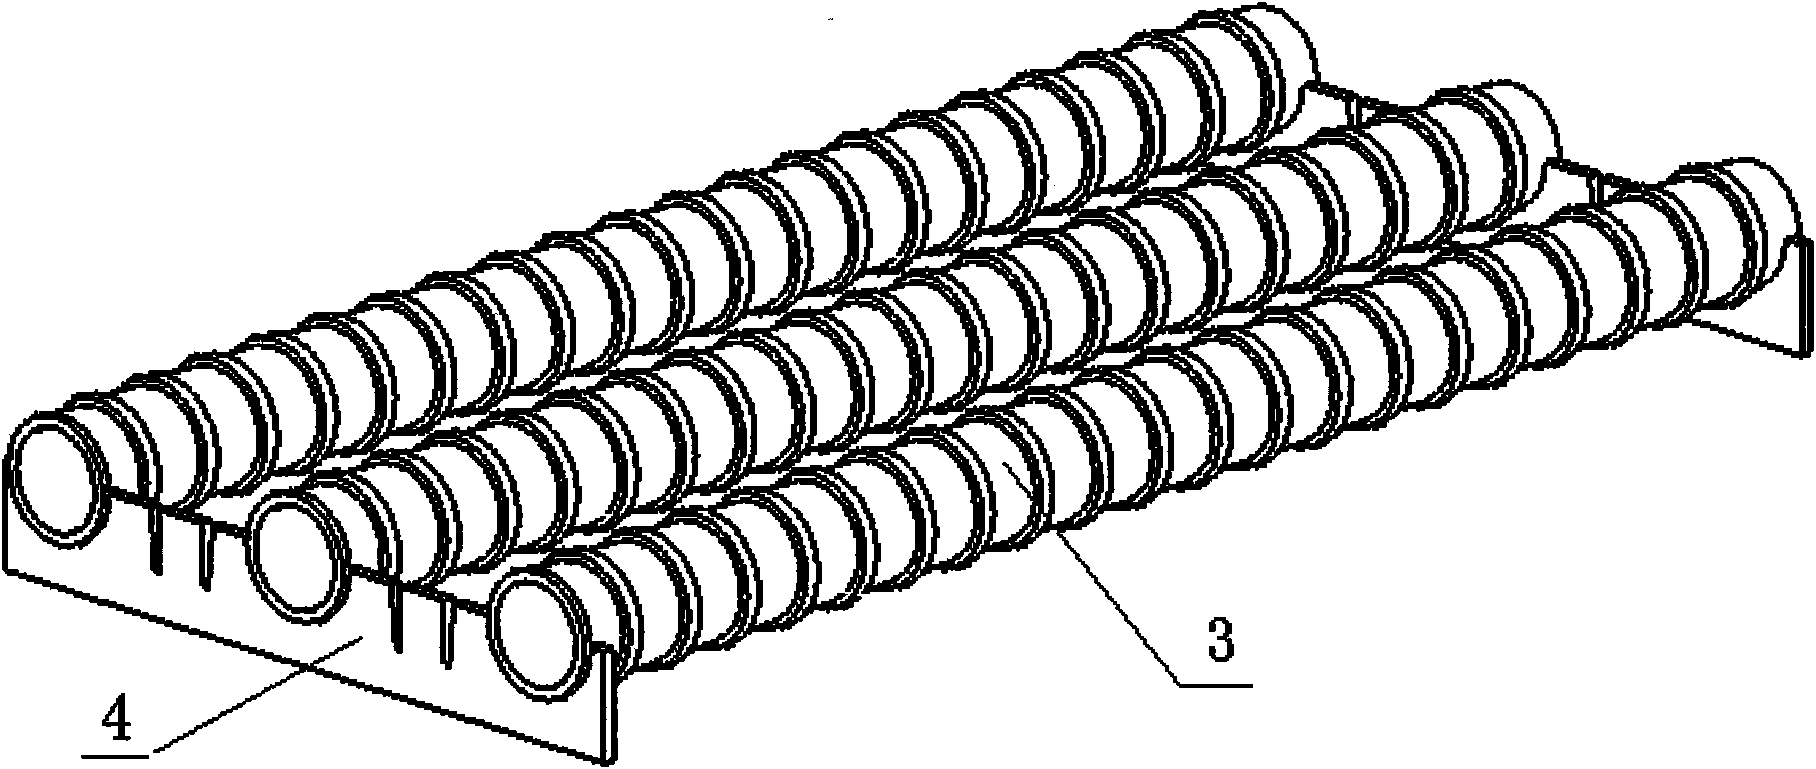 Manufacturing method of steel-rolling cooling bed roller-oriented support platform